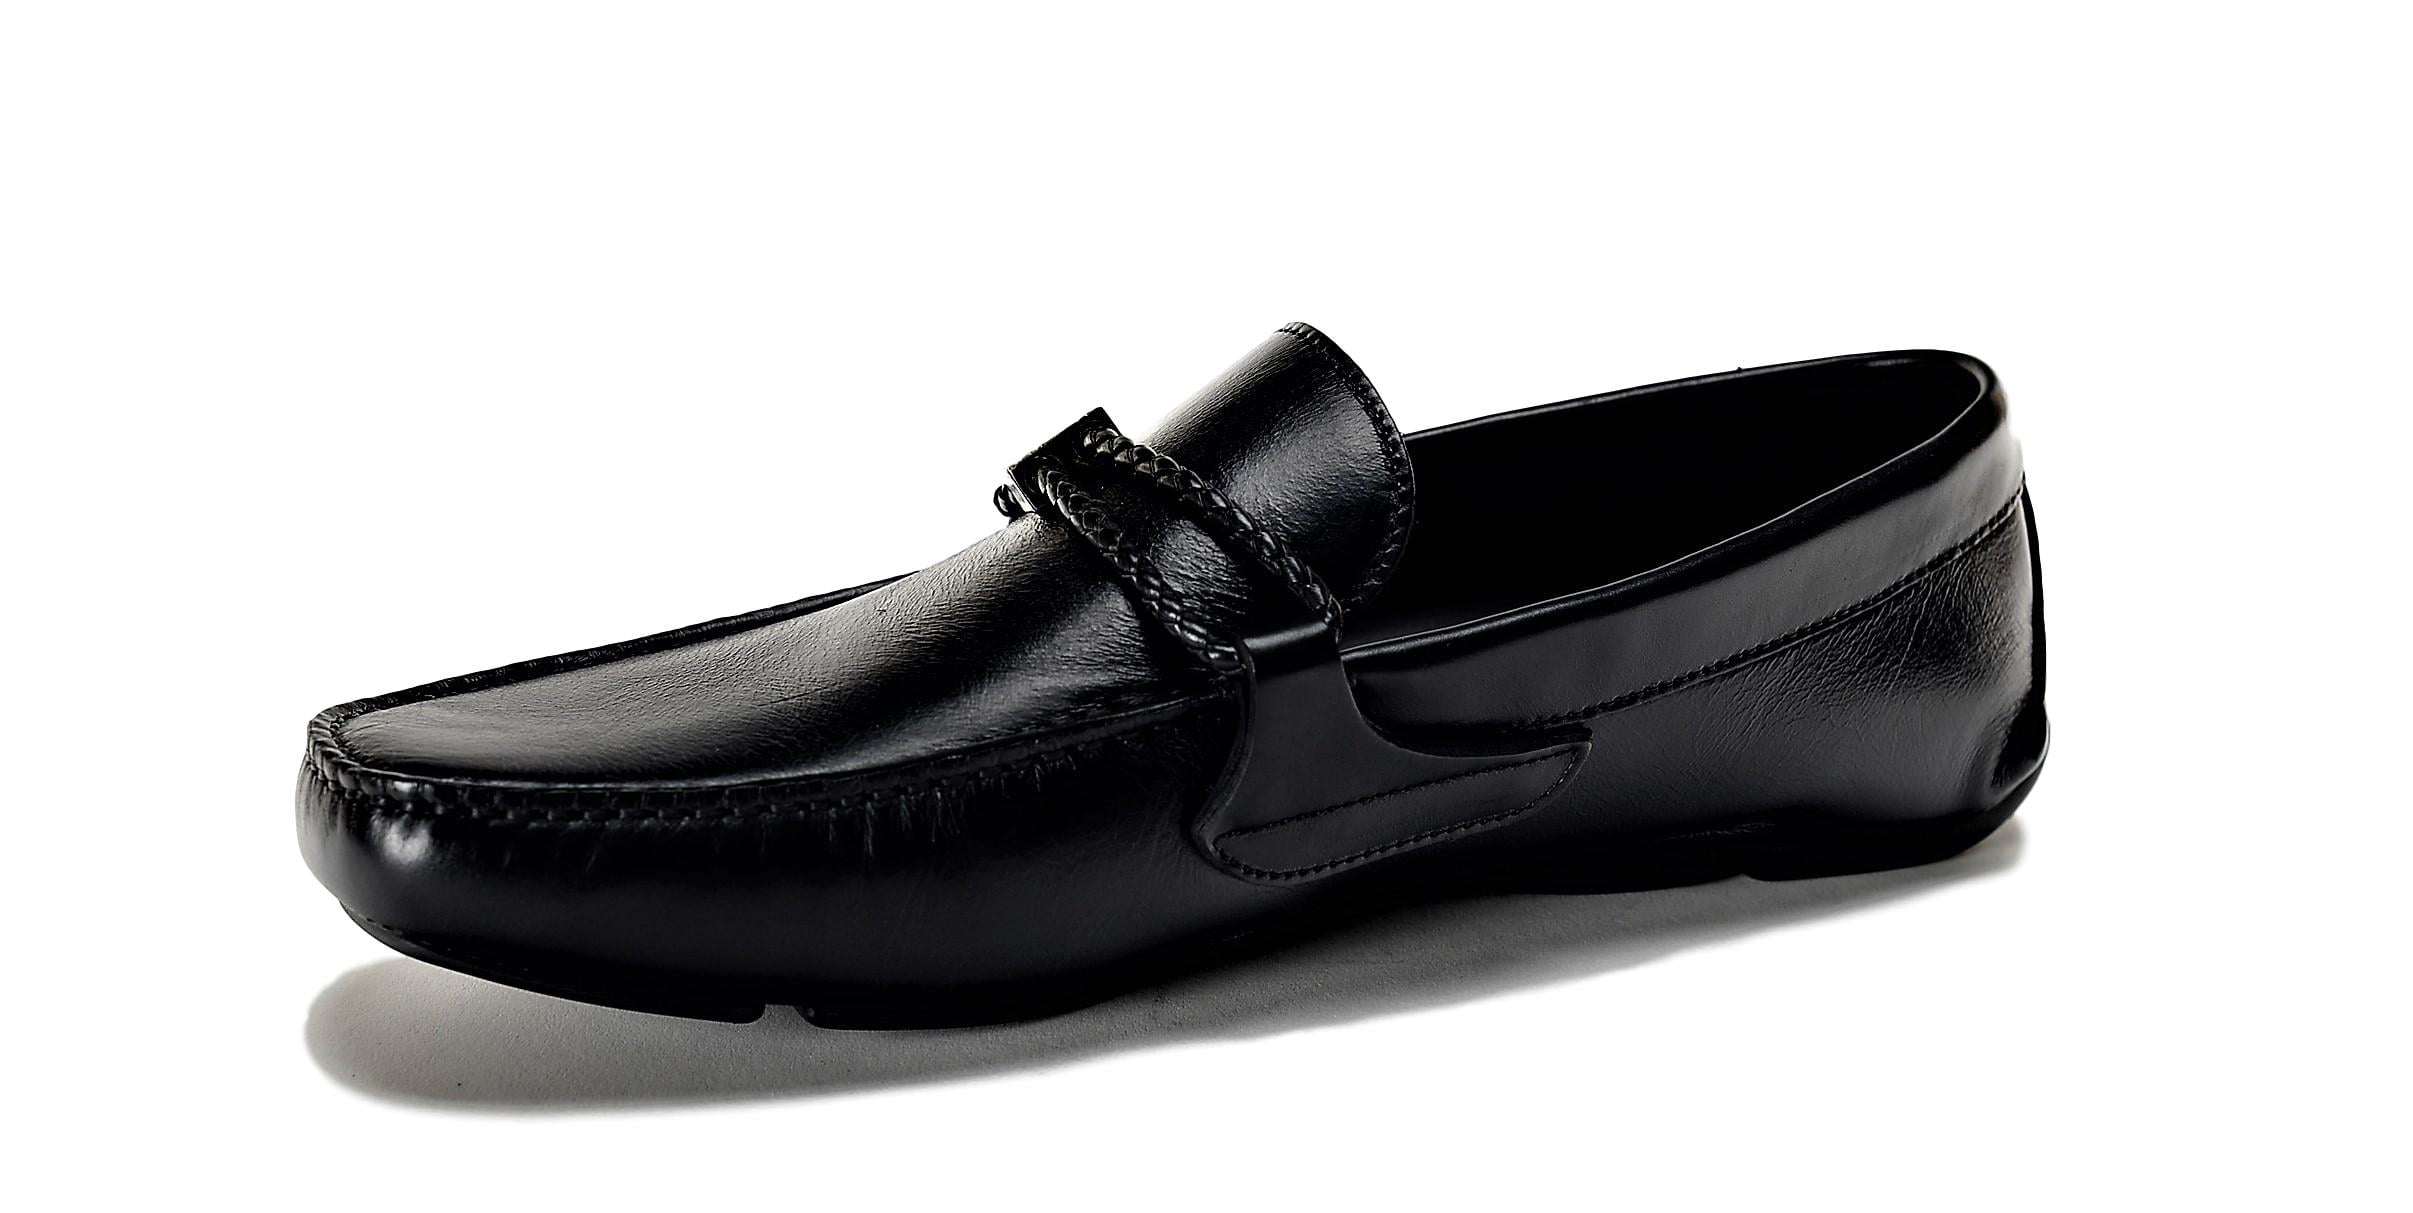 Medusa Leather Loafers Shoes Black 